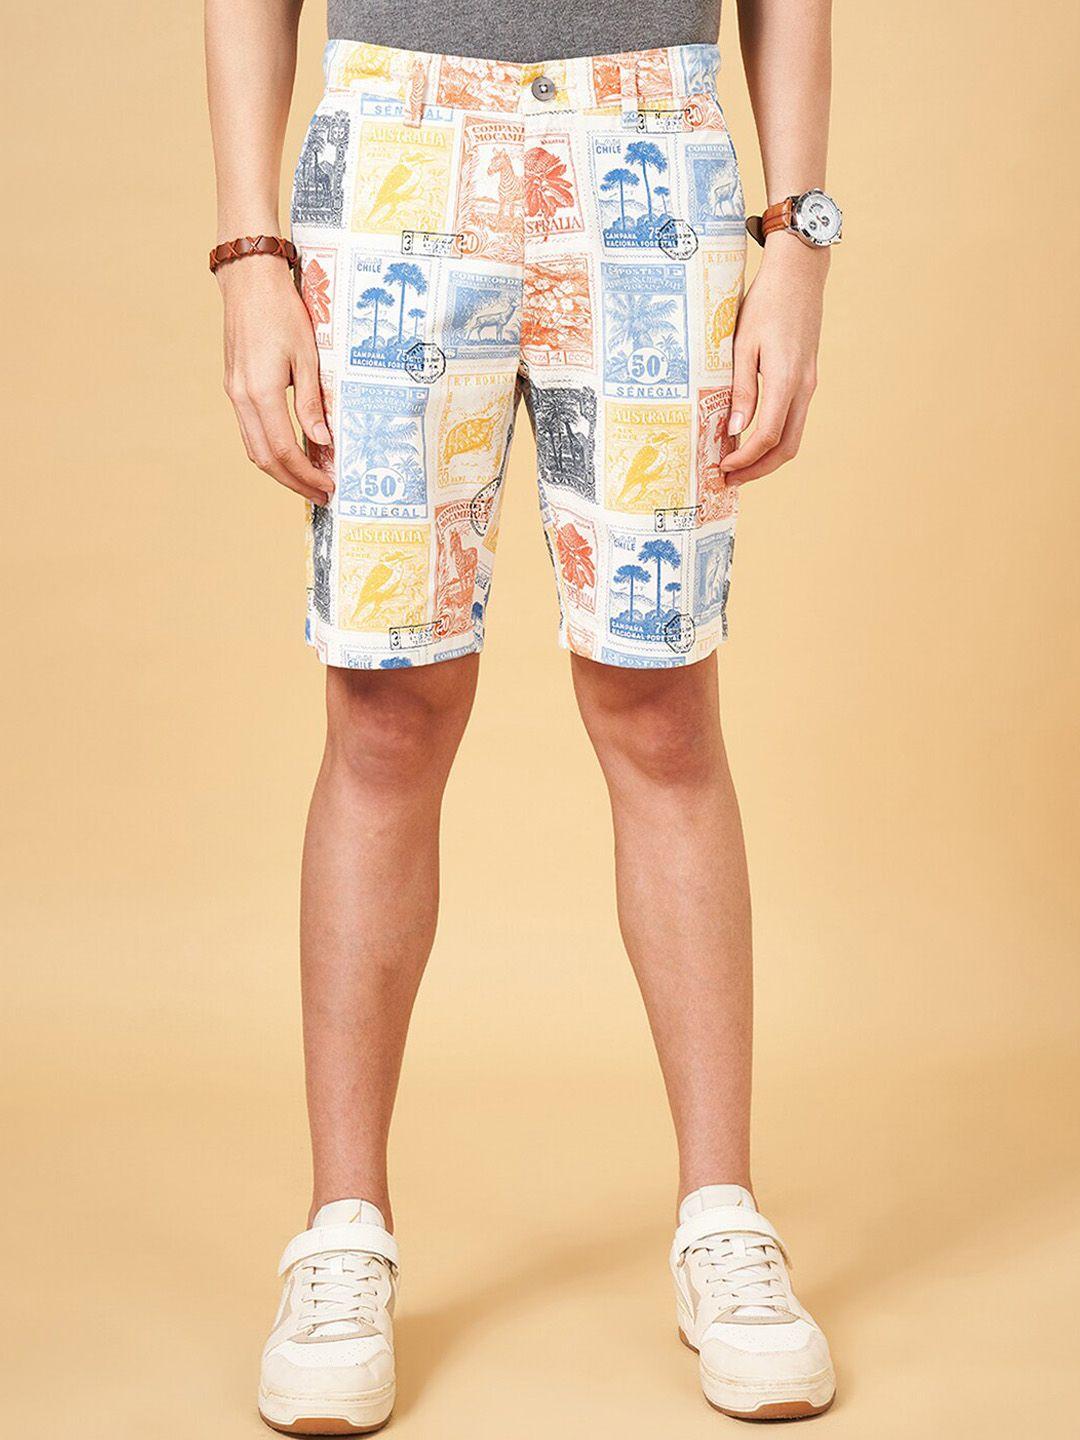 urban ranger by pantaloons men graphic printed slim fit pure cotton shorts